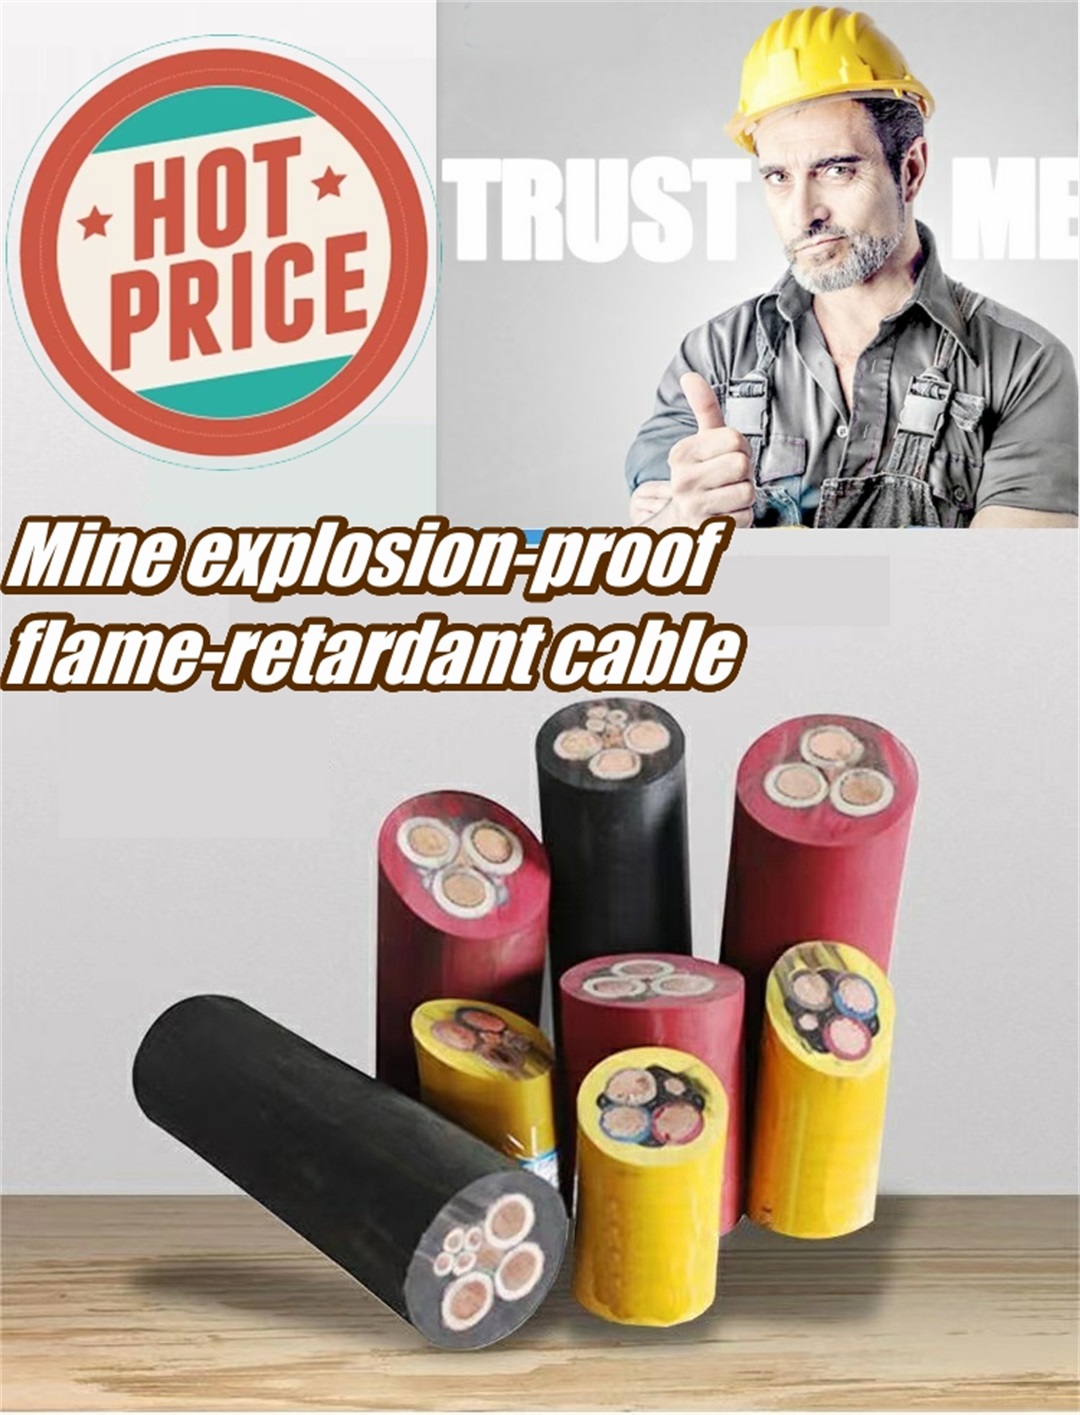 Mobile explosion-proof flame-retardant rubber sheathed flexible copper cable para sa minahan sa karbon